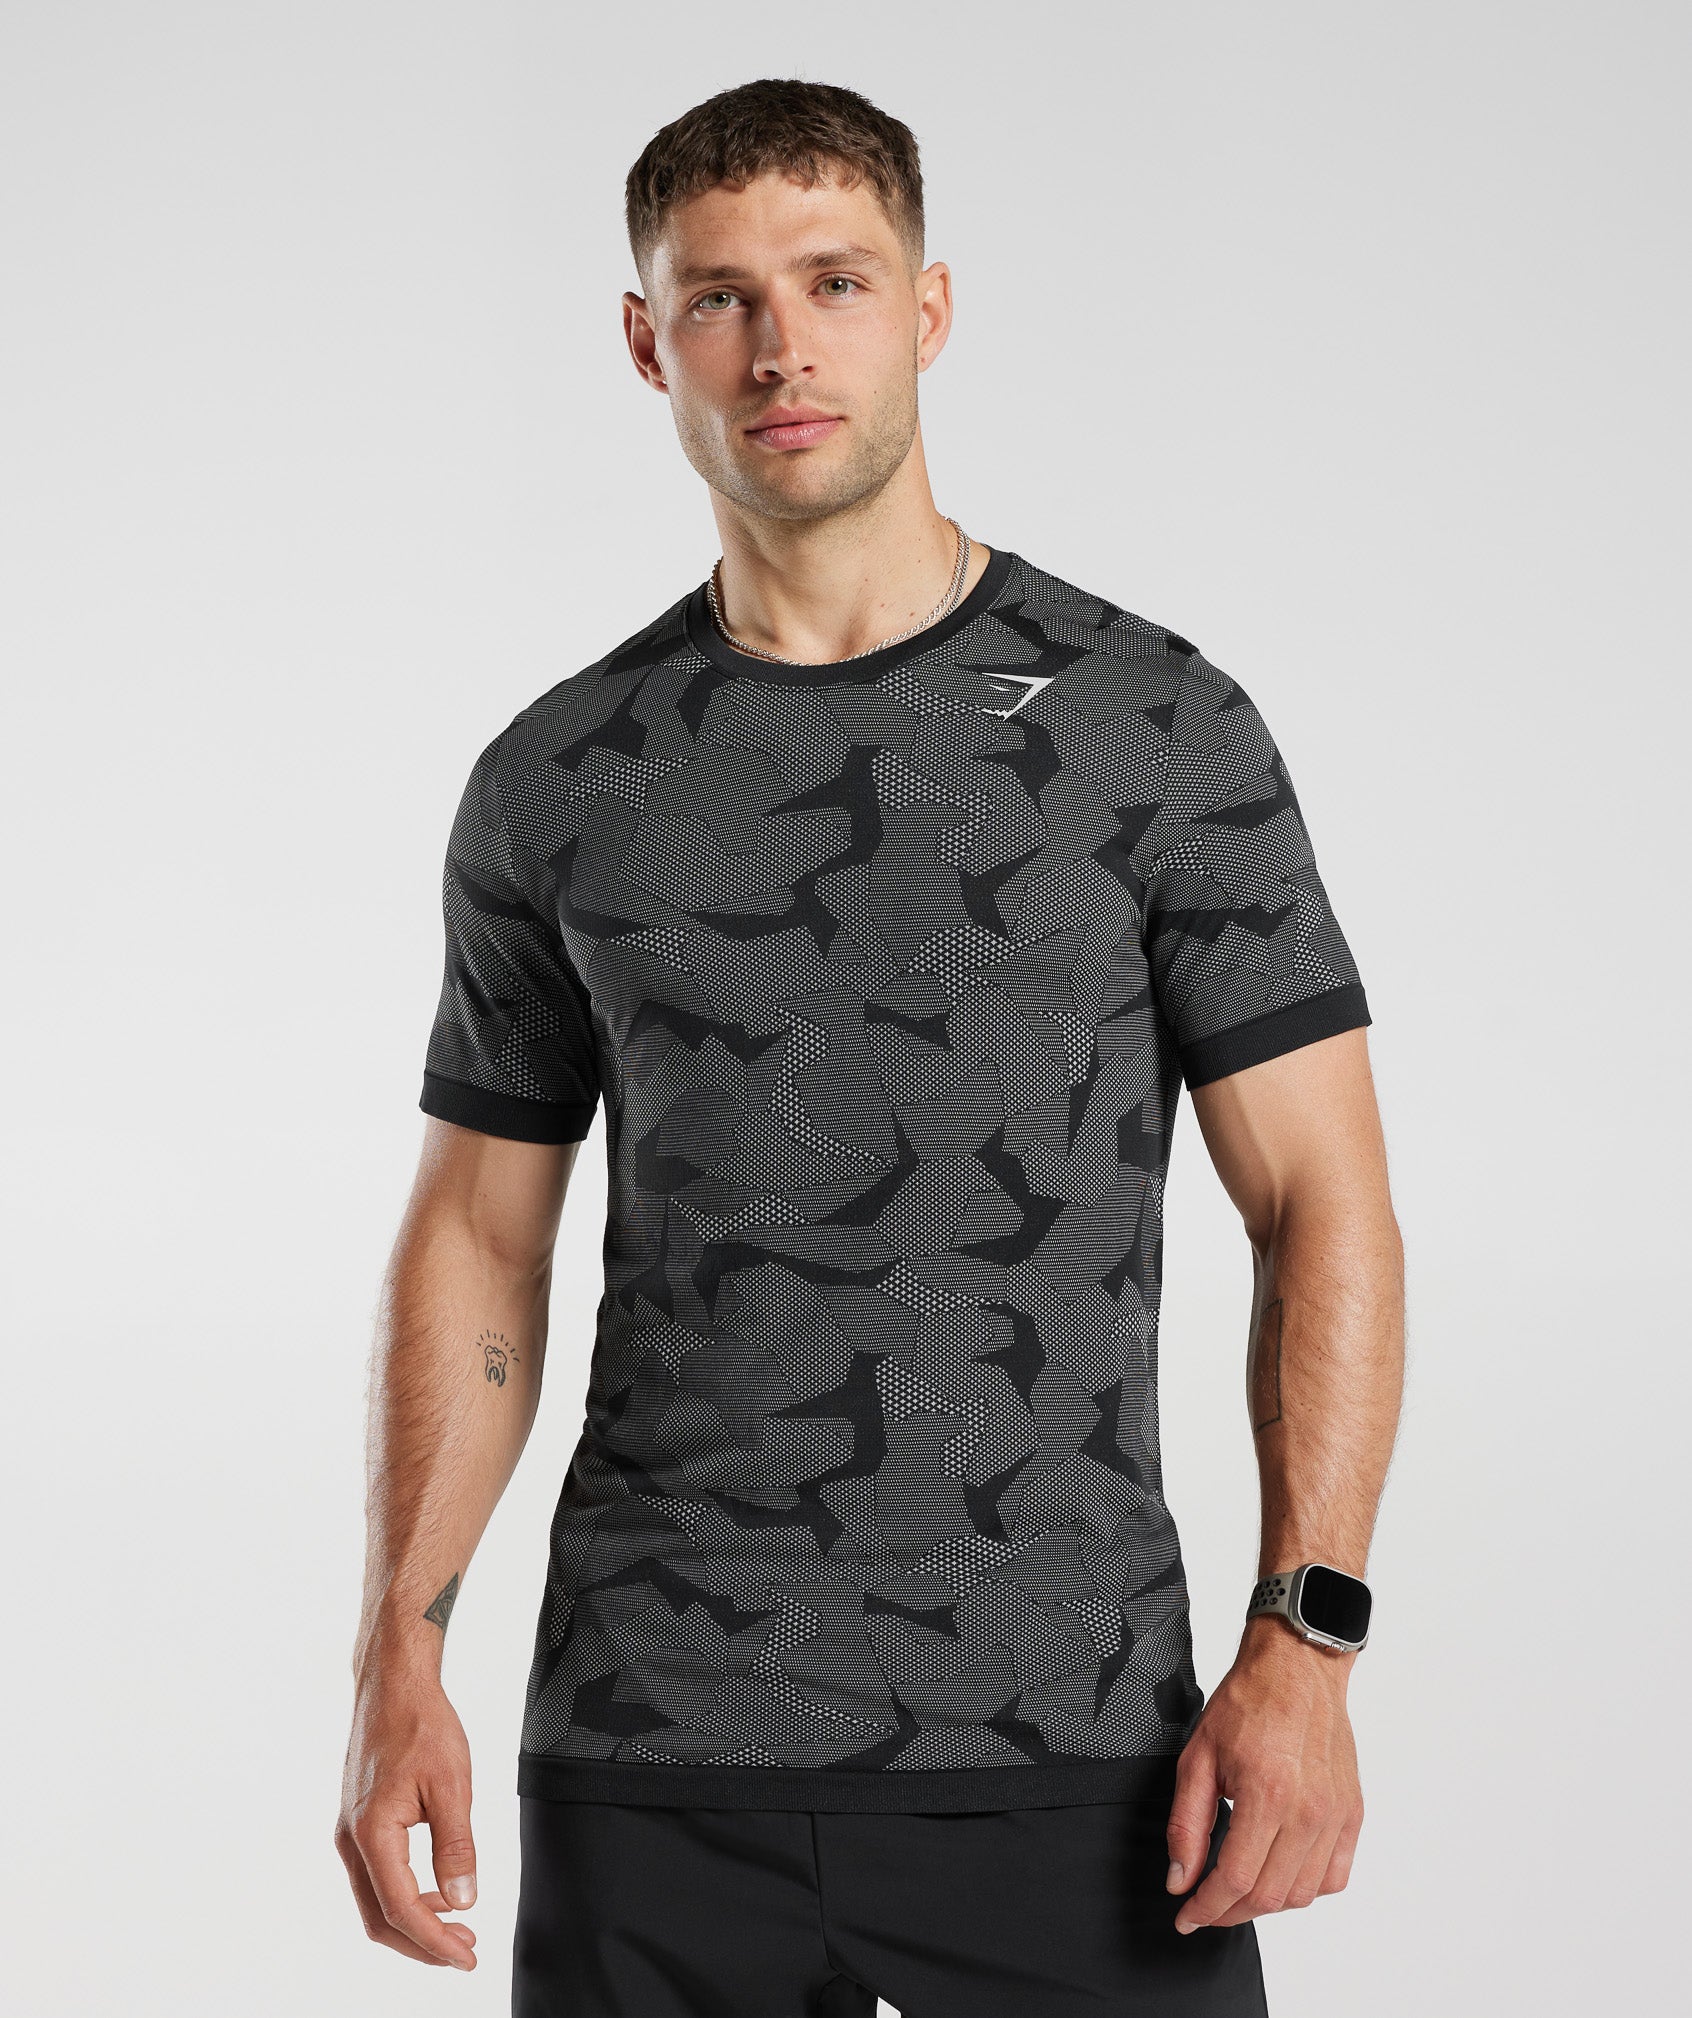 Gymshark Geo Seamless Long Sleeve T-Shirt - Black/Charcoal Grey